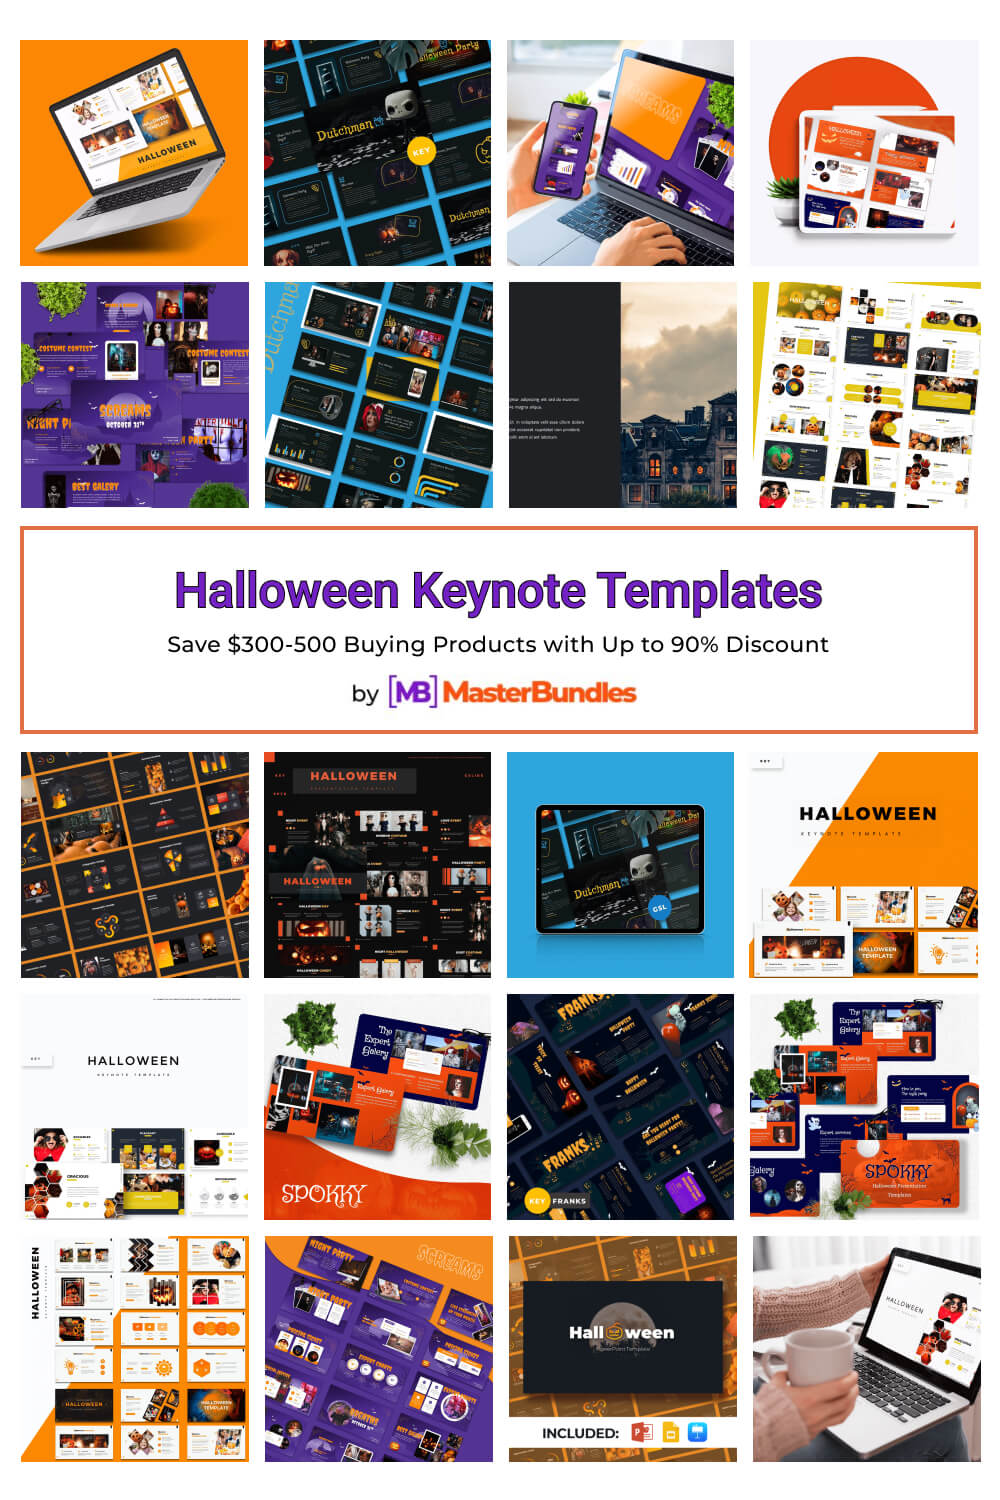 halloween keynote templates pinterest image.